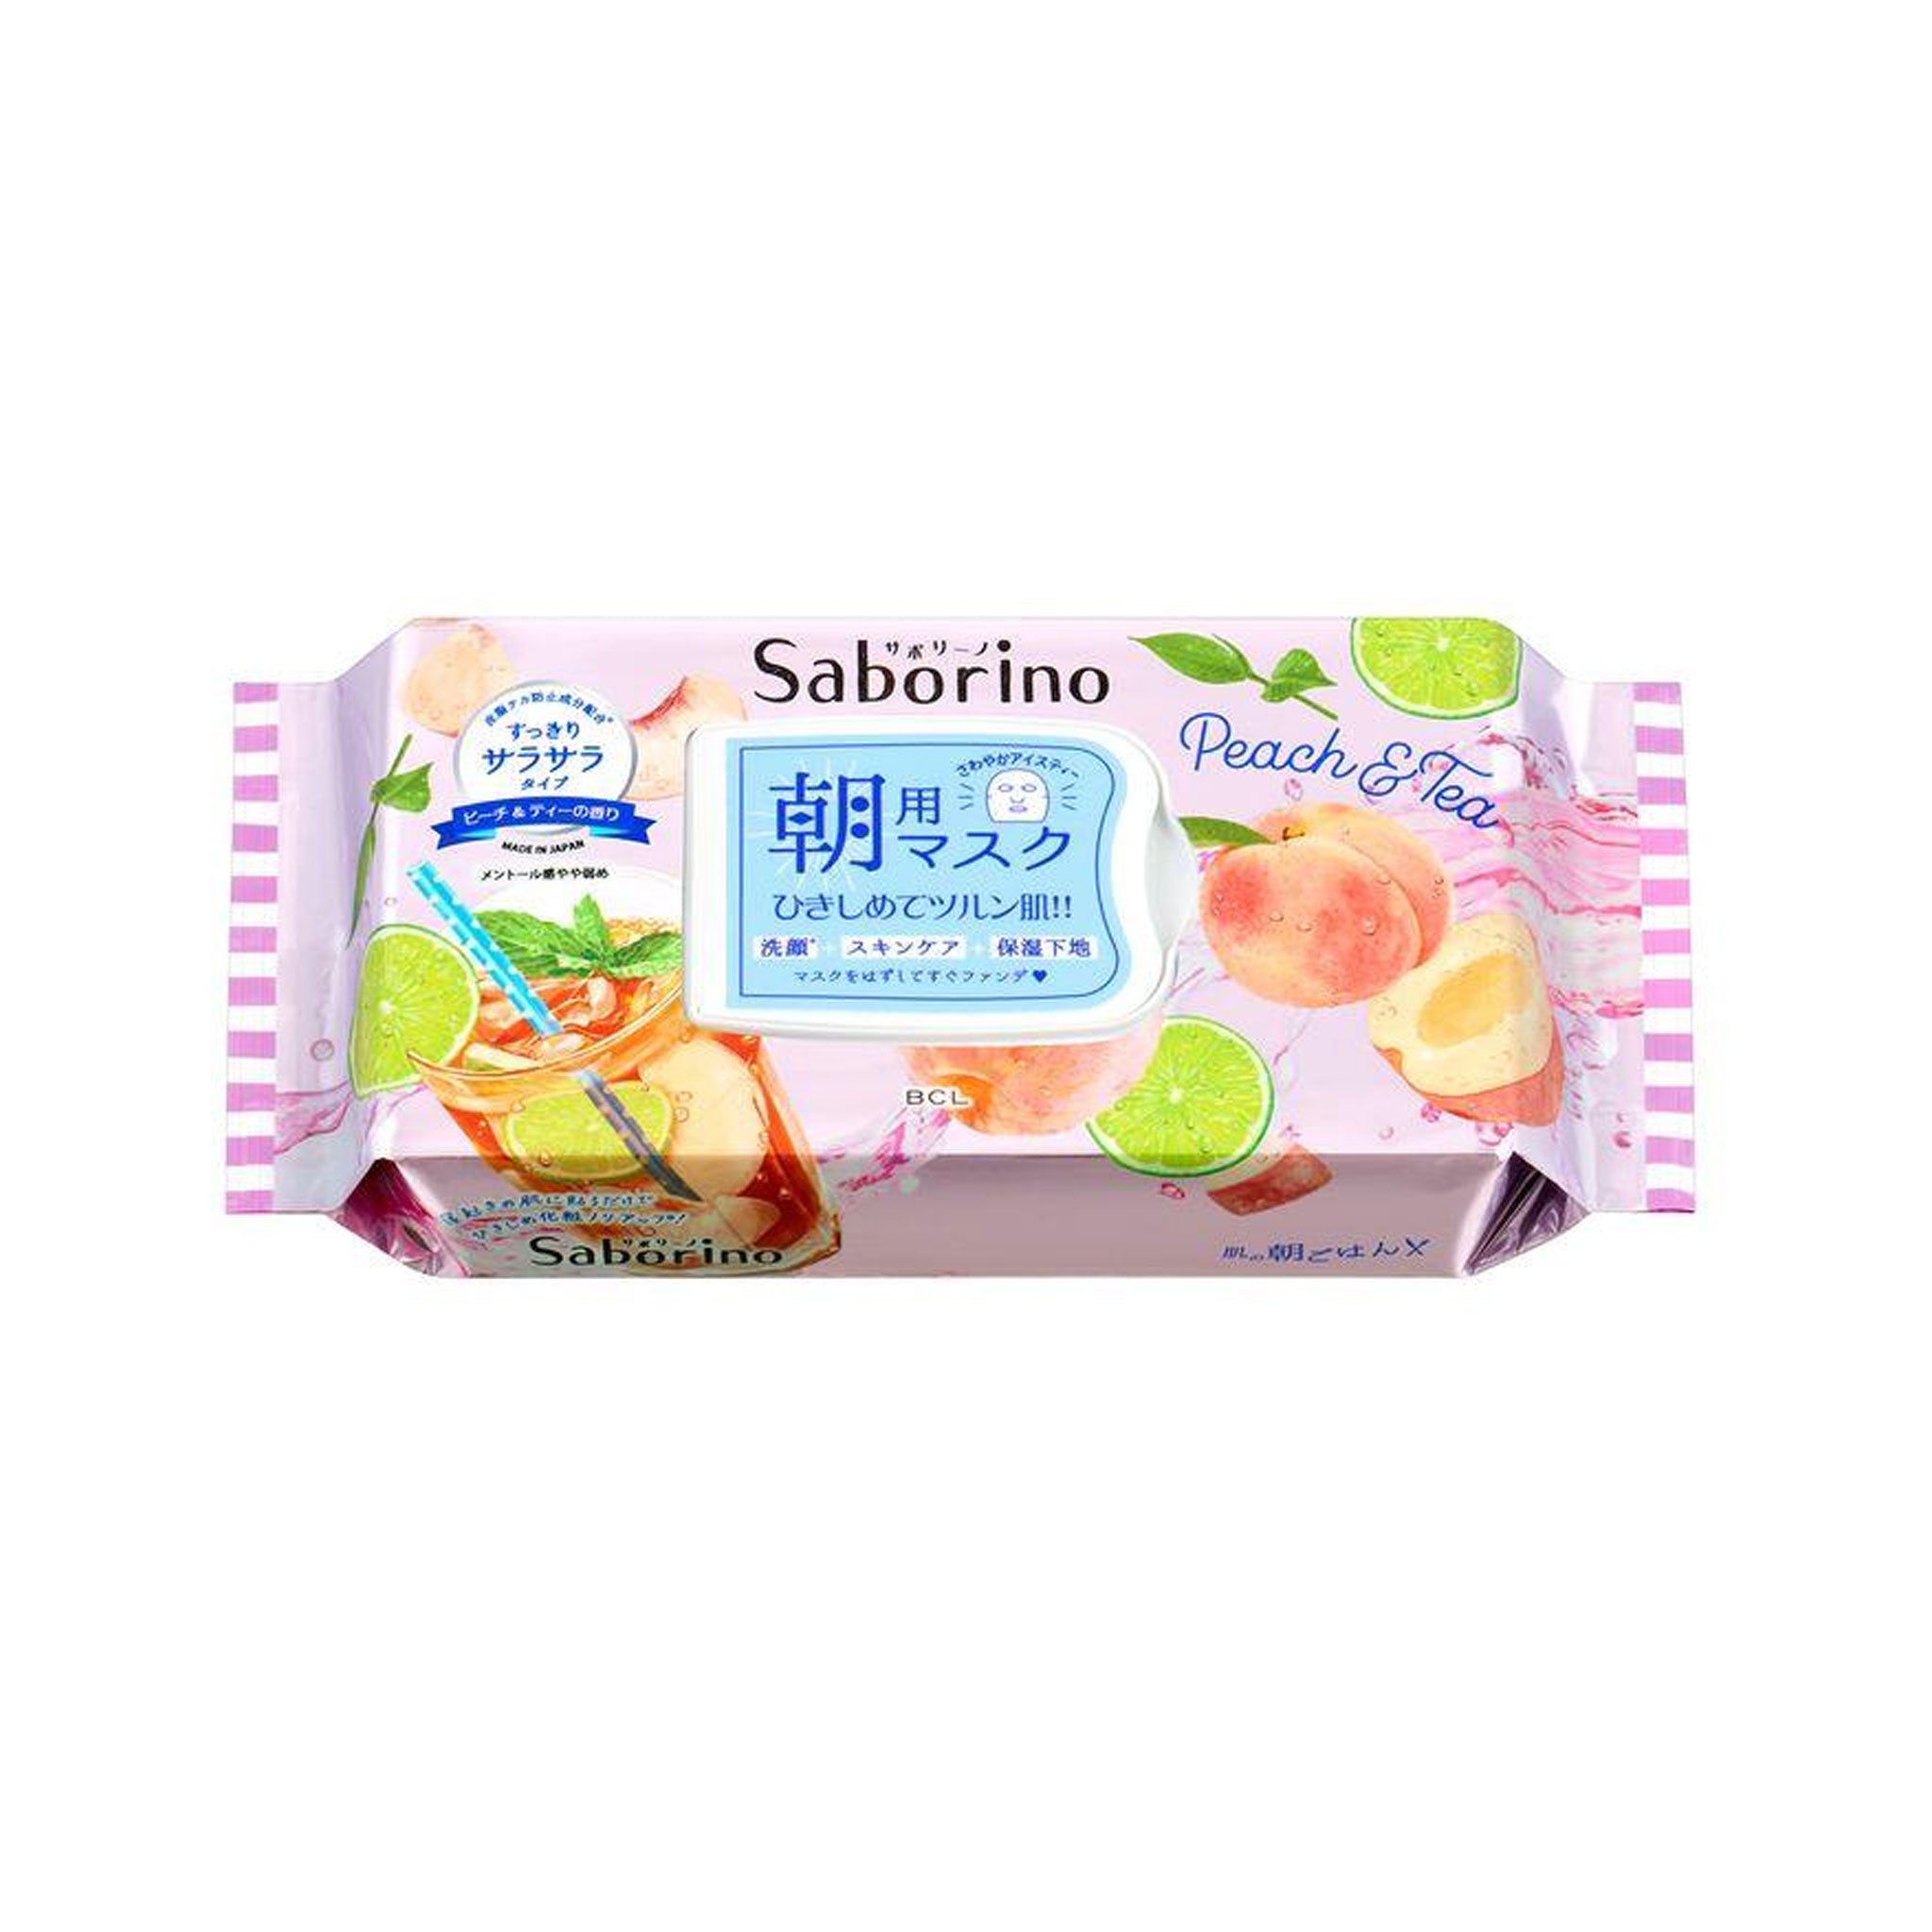 BCL Saborino Morning Mask Peach Tea Limited Edition 28pcs